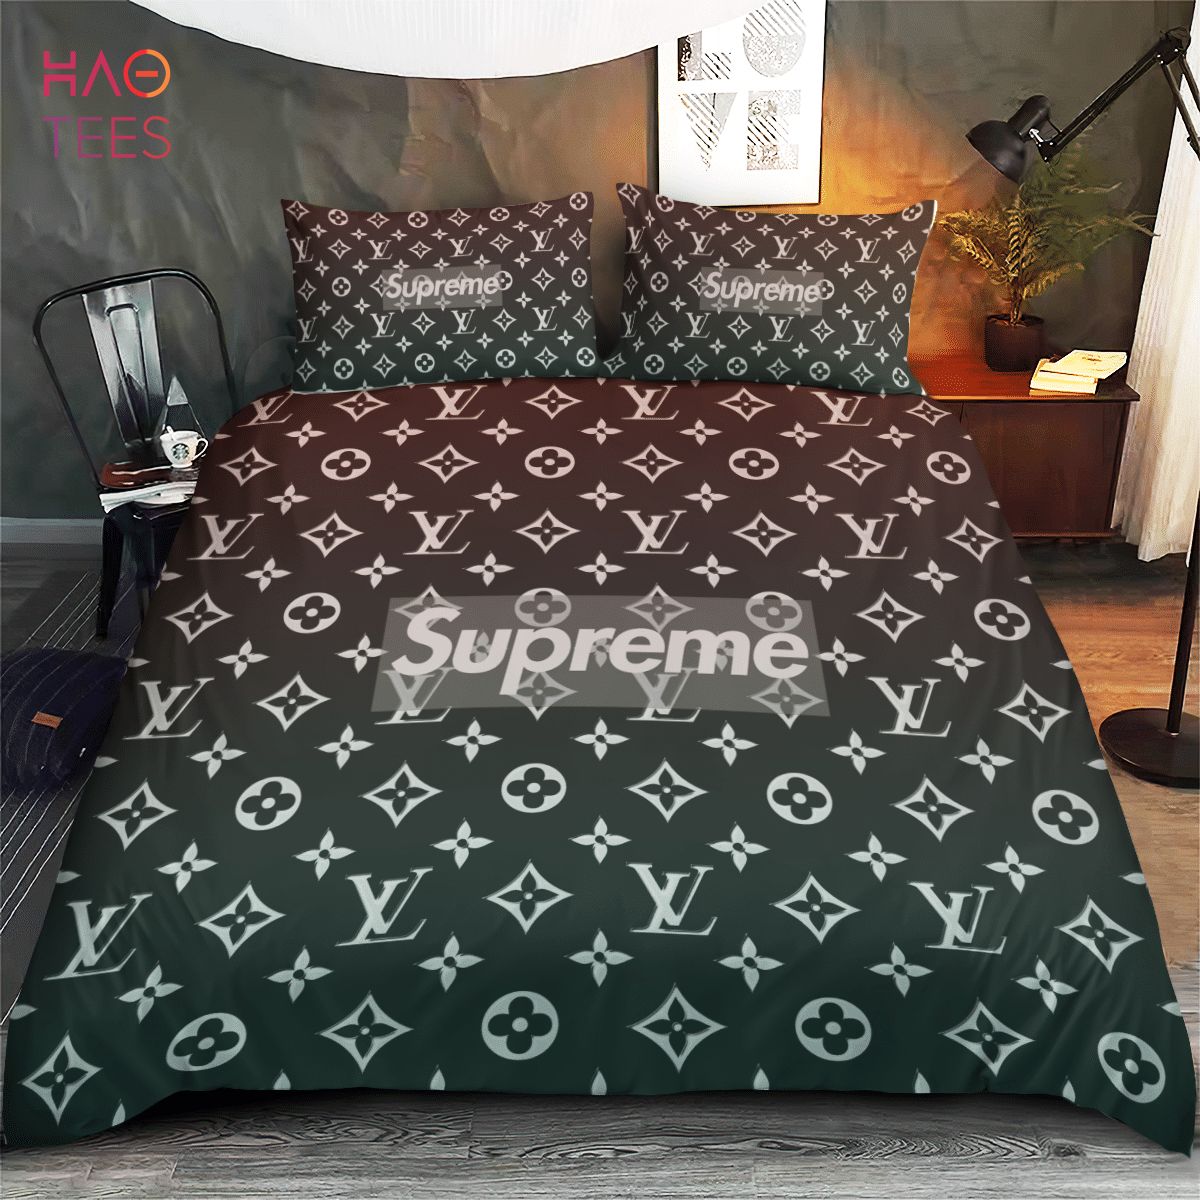 louis vuitton supreme bed sheets